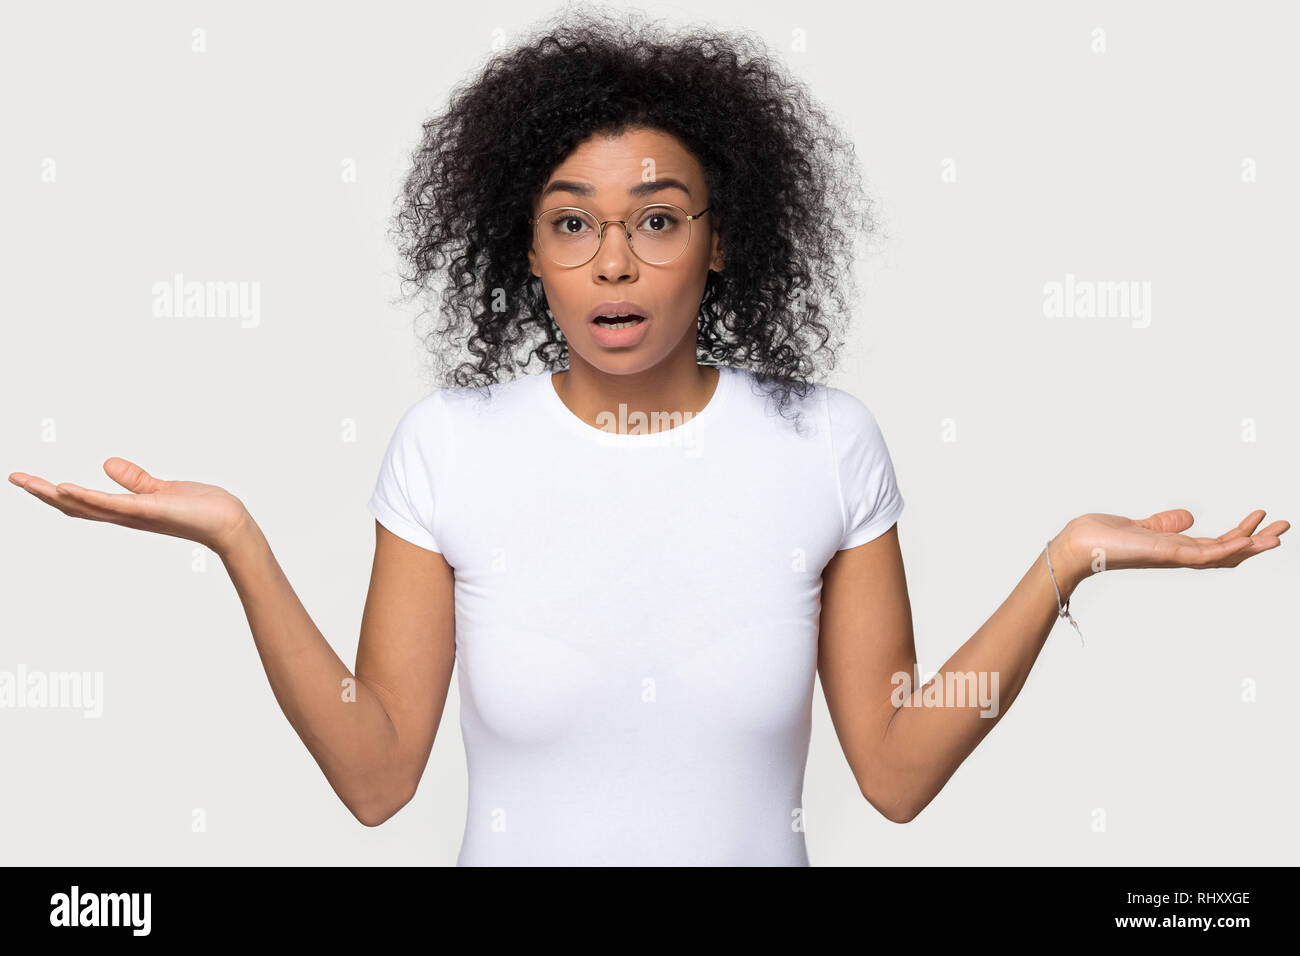 Confused doubtful baffled black woman shrugging looking at camera Stock Photo